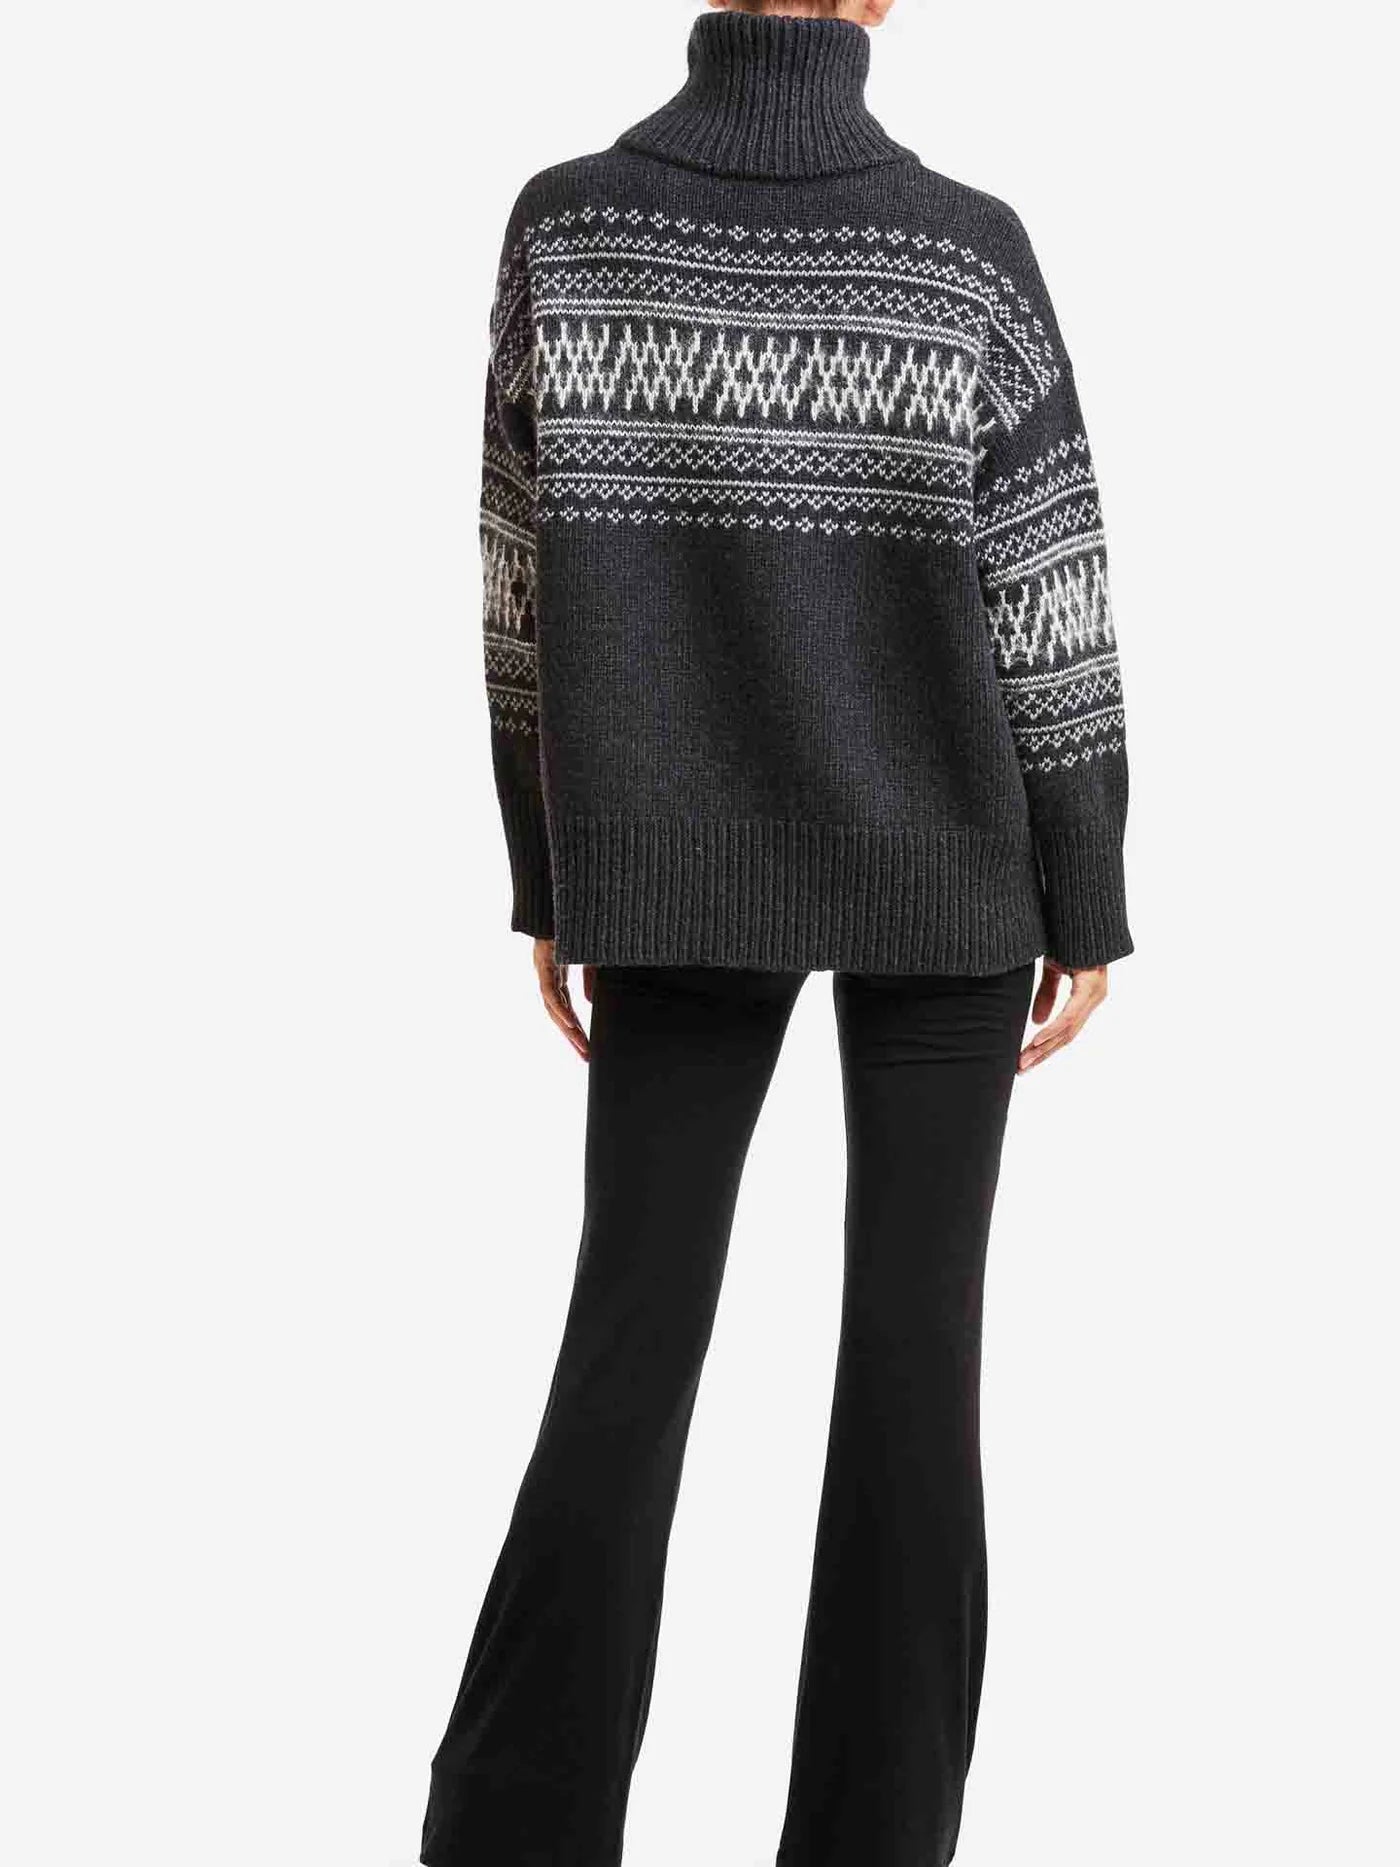 We Norwegians - Setesdal Sweater - Charcoal (D)